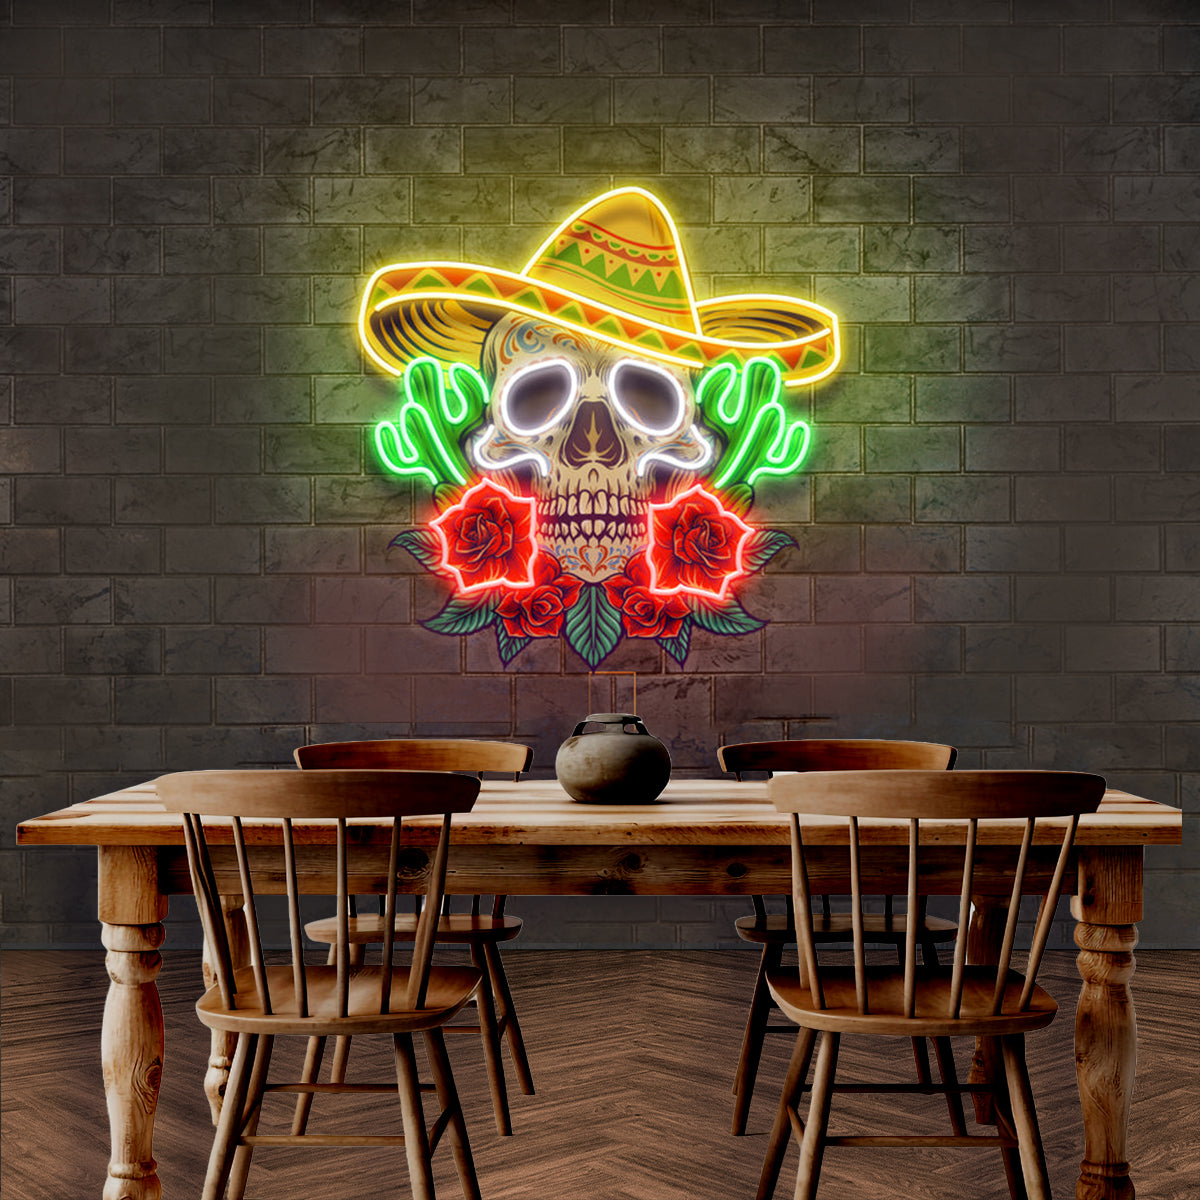 Mexican Food Restaurants Led Neon Light